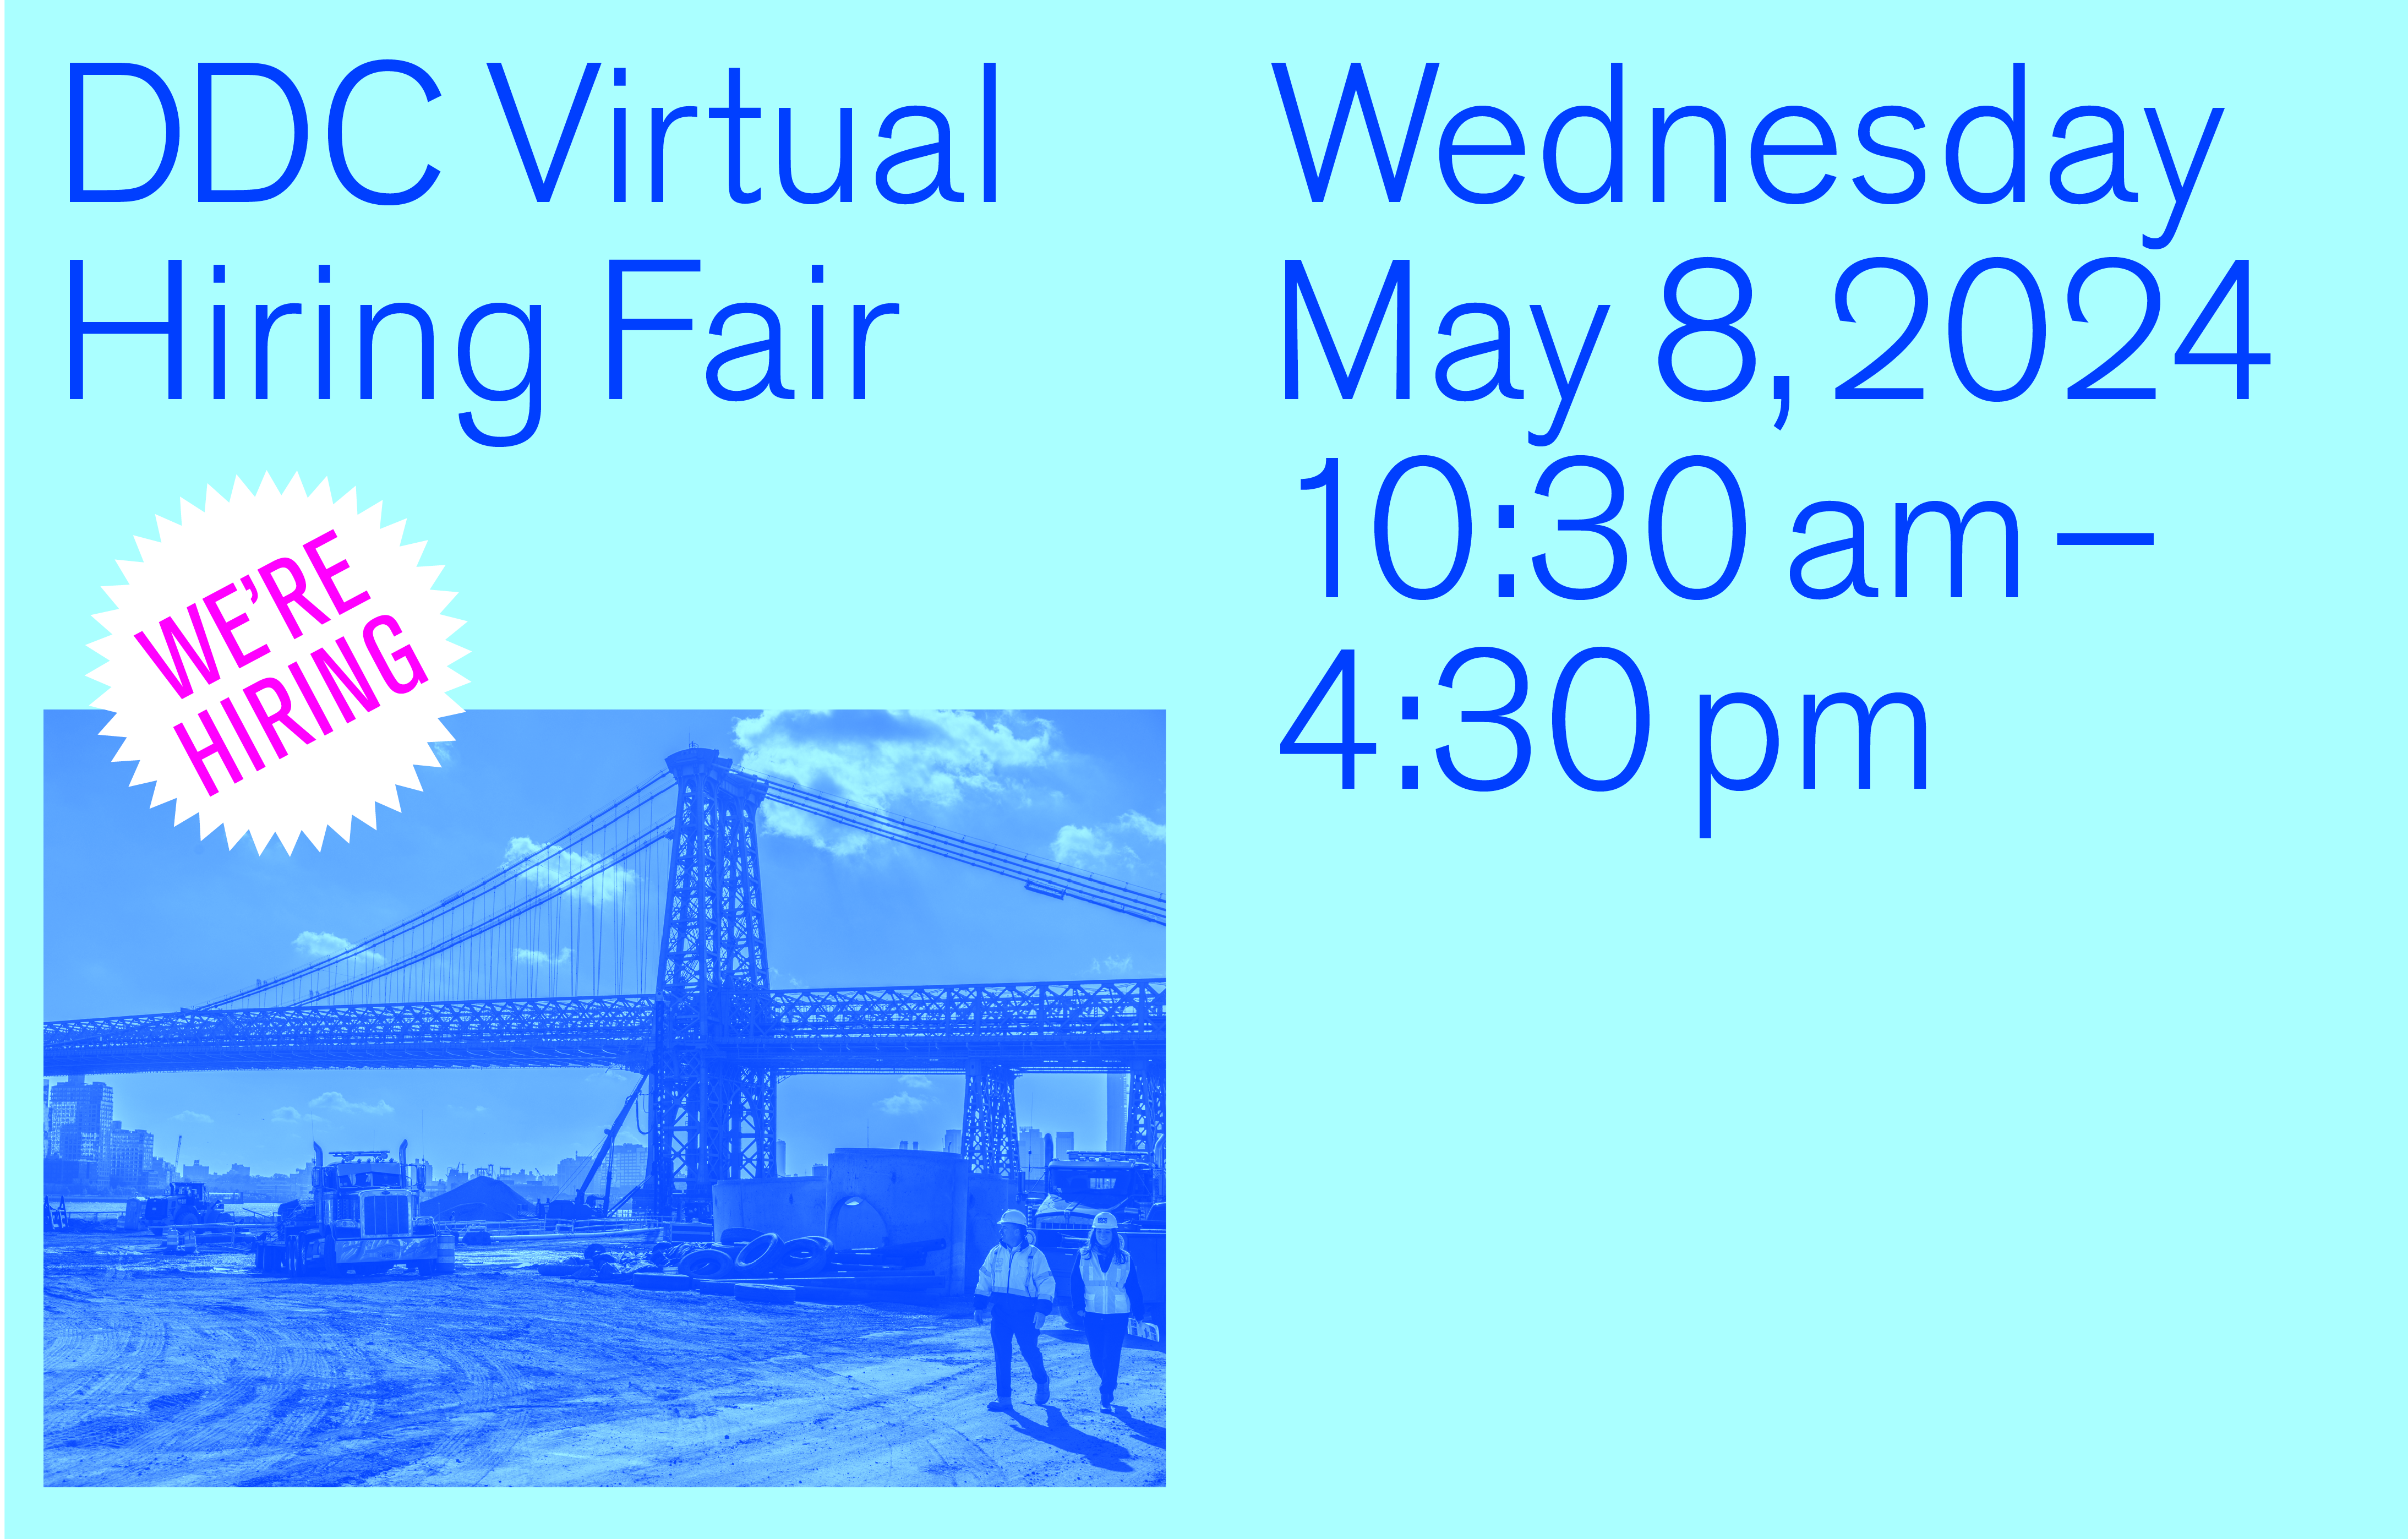 Banner announcing virtual event hiring fair on May 8 2024
                                           